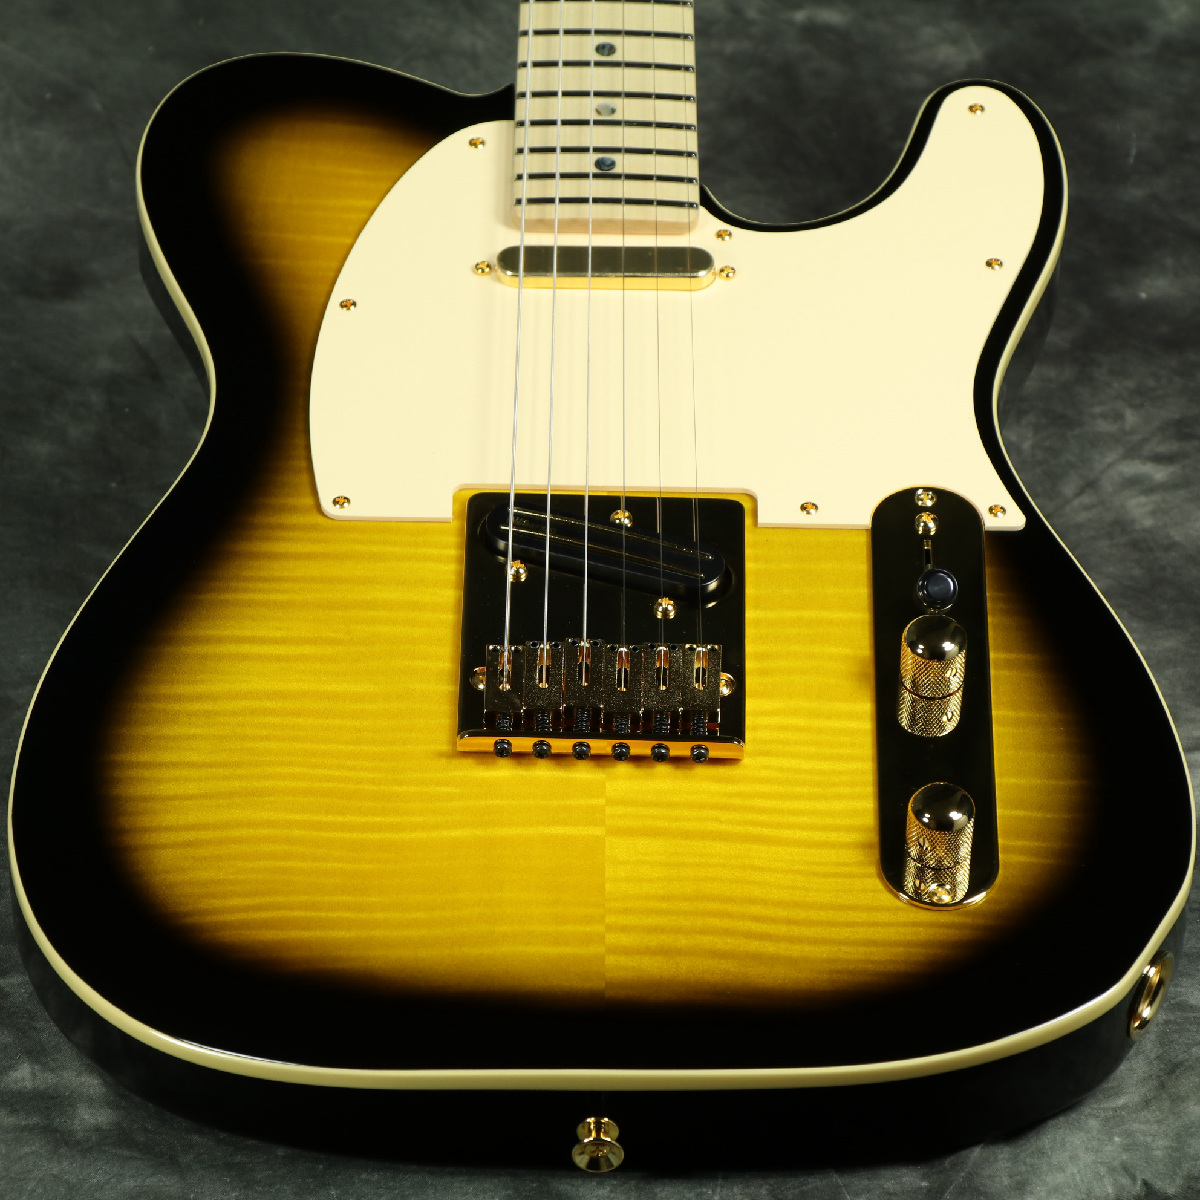 Fender / Japan Exclusive Richie Kotzen Telecaster Brown Sunburst